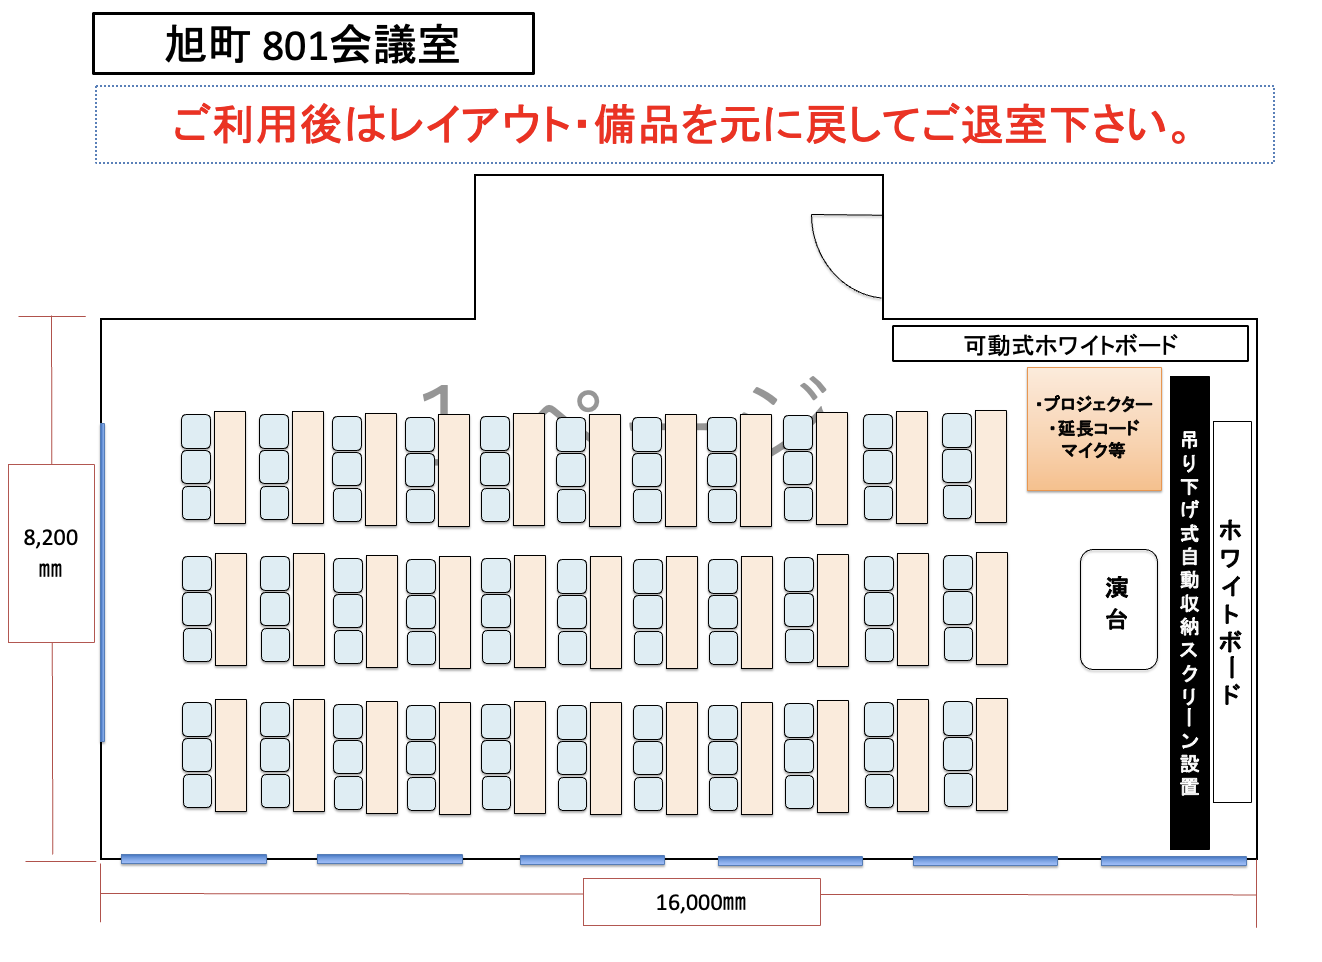 asahi801 floorplan